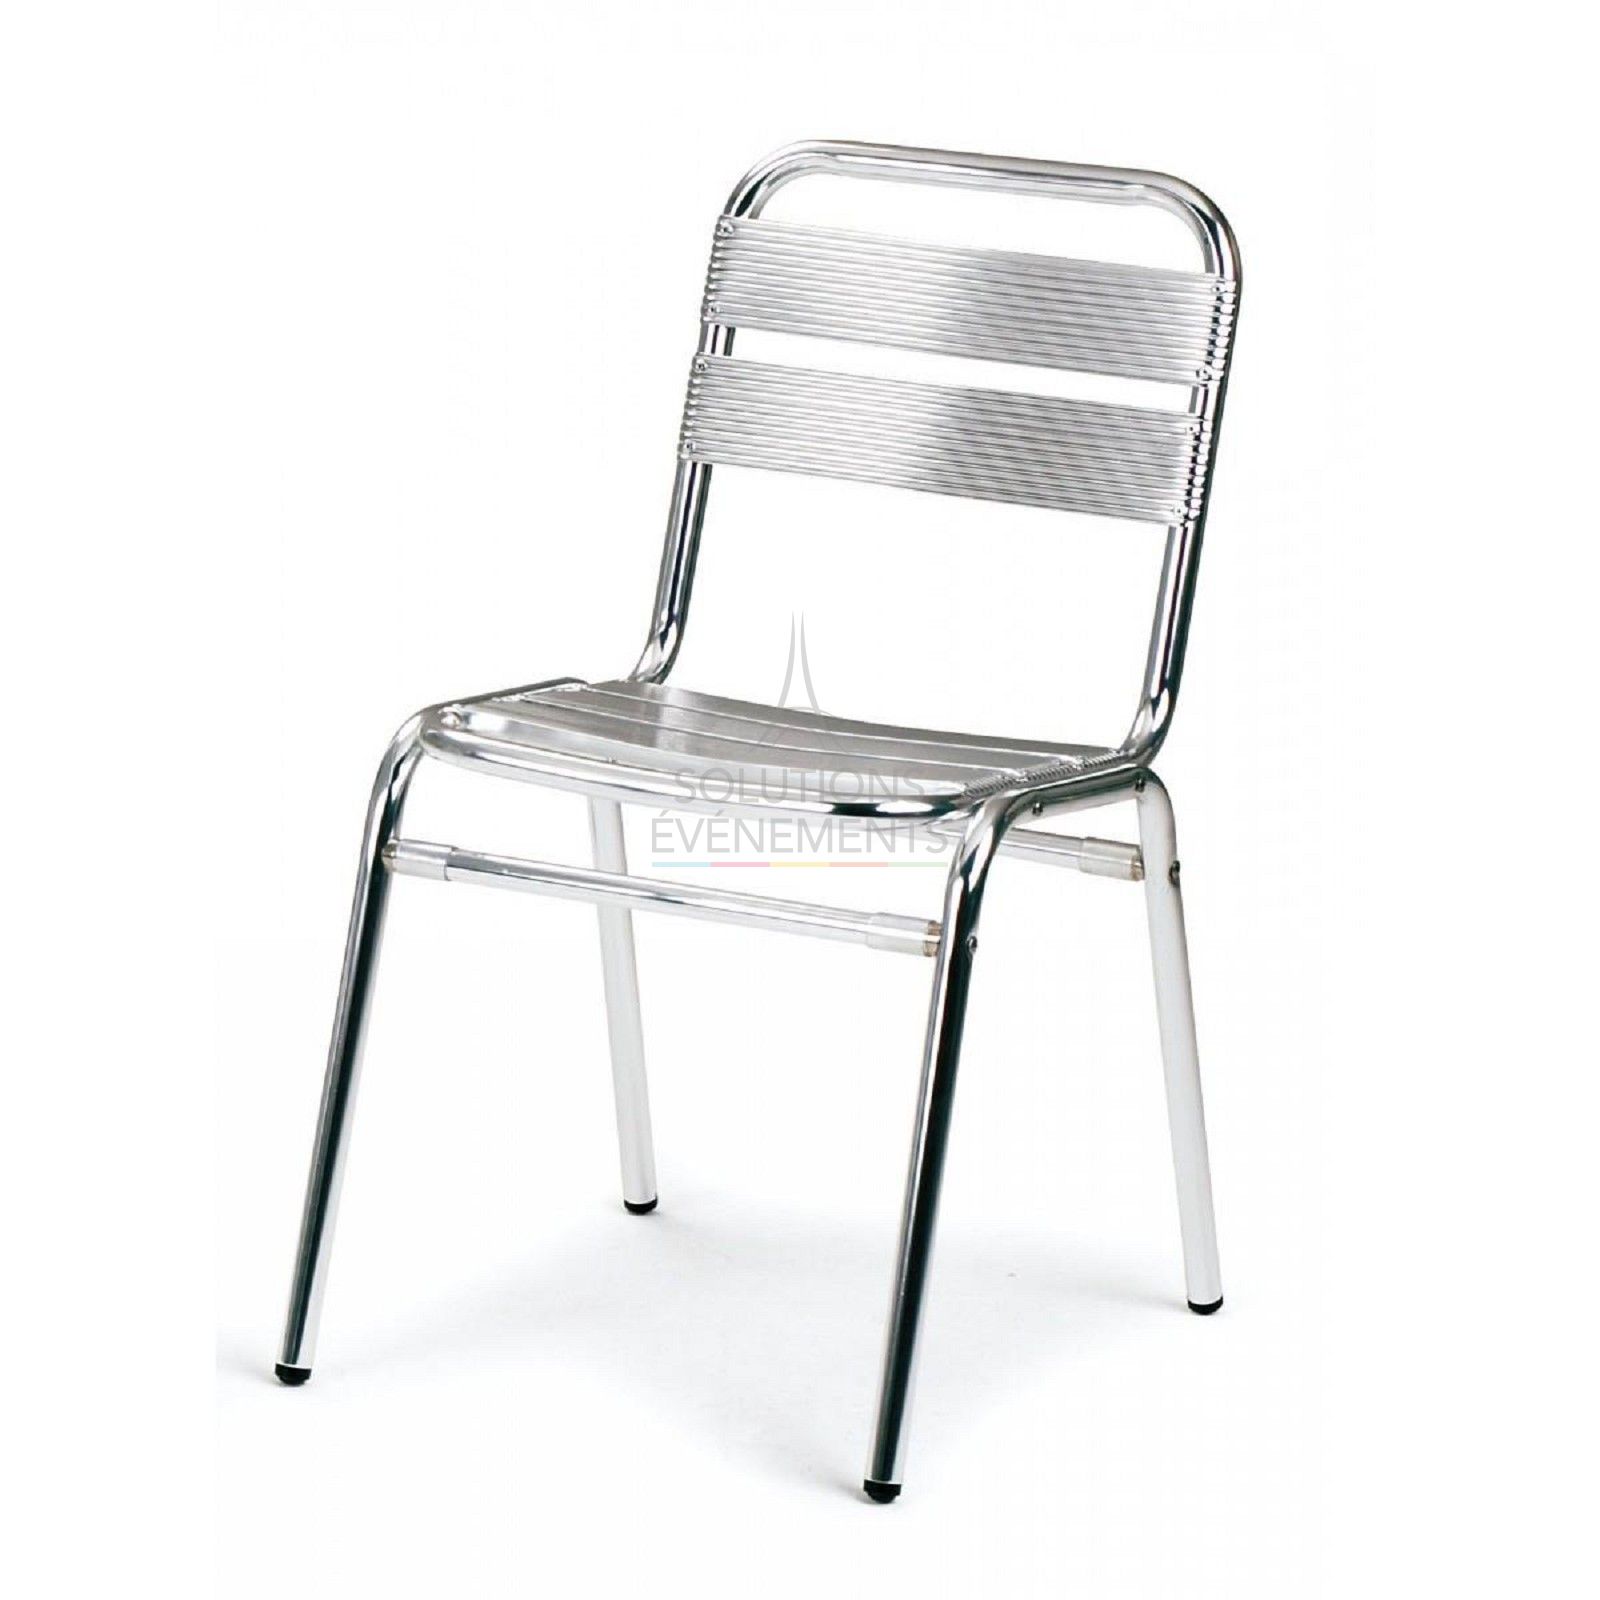 Location de chaise bistrot en aluminium et inox